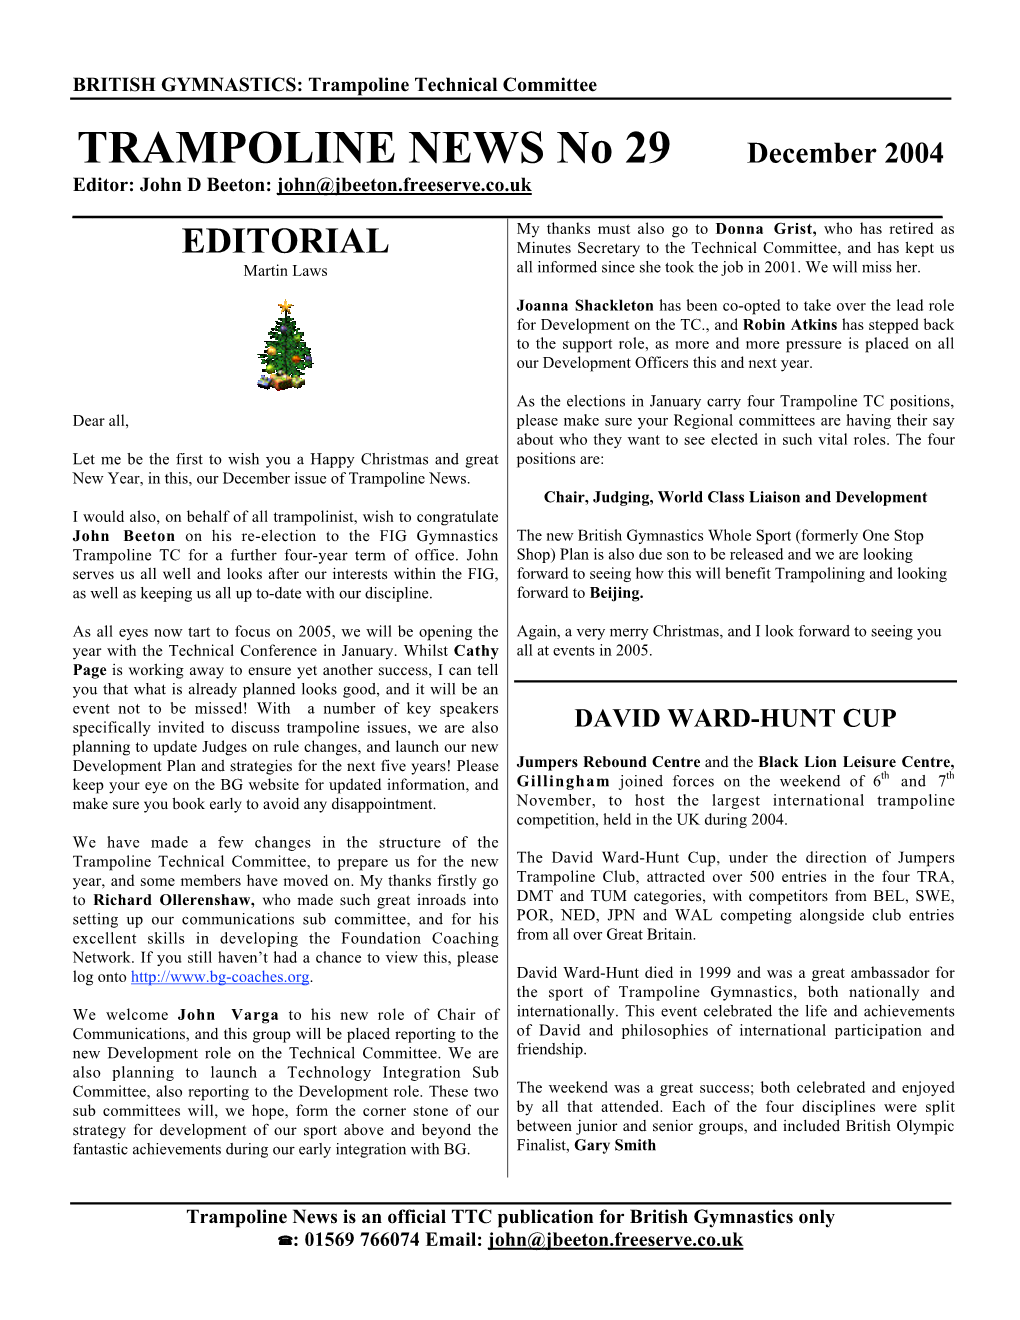 TRAMPOLINE NEWS No 29 December 2004